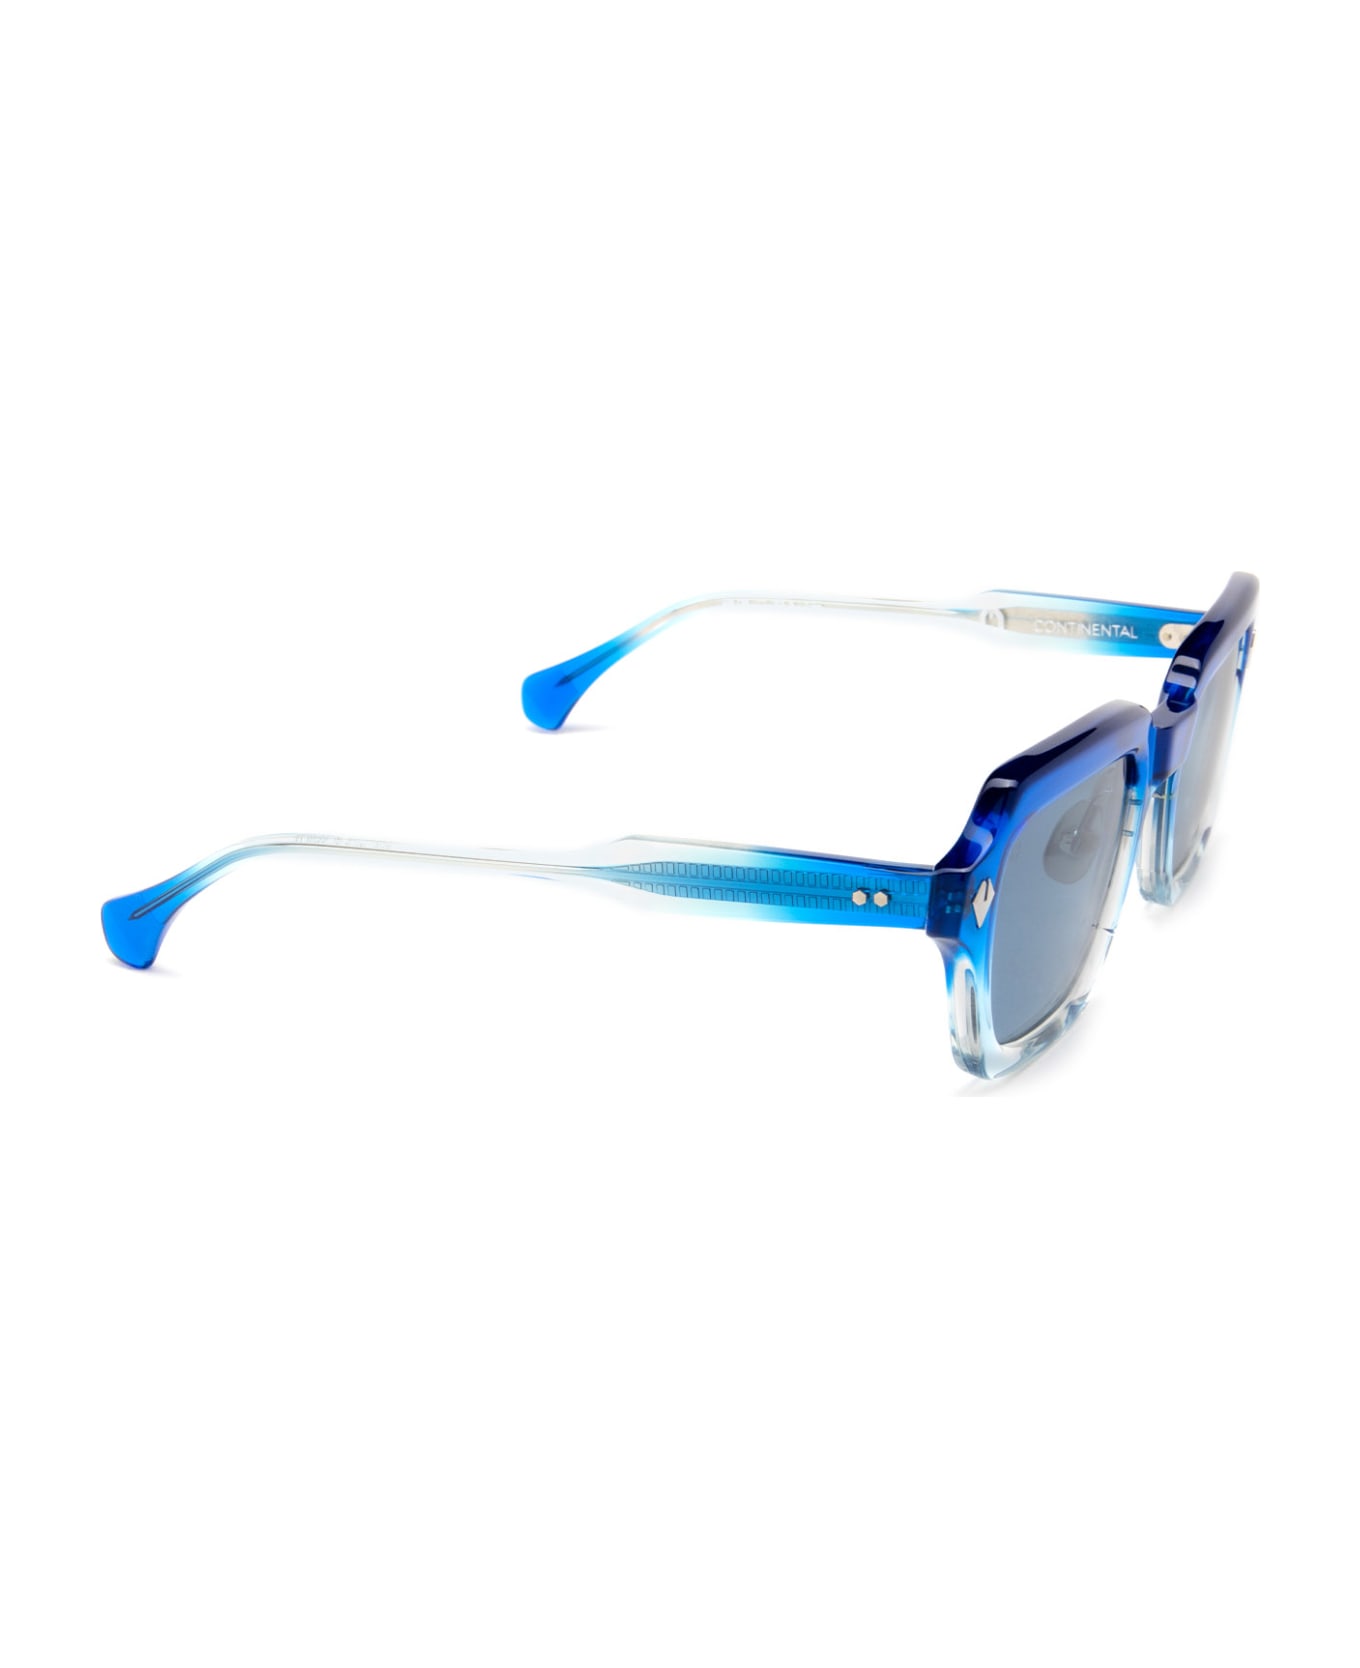 T Henri Continental Santorini Sunglasses